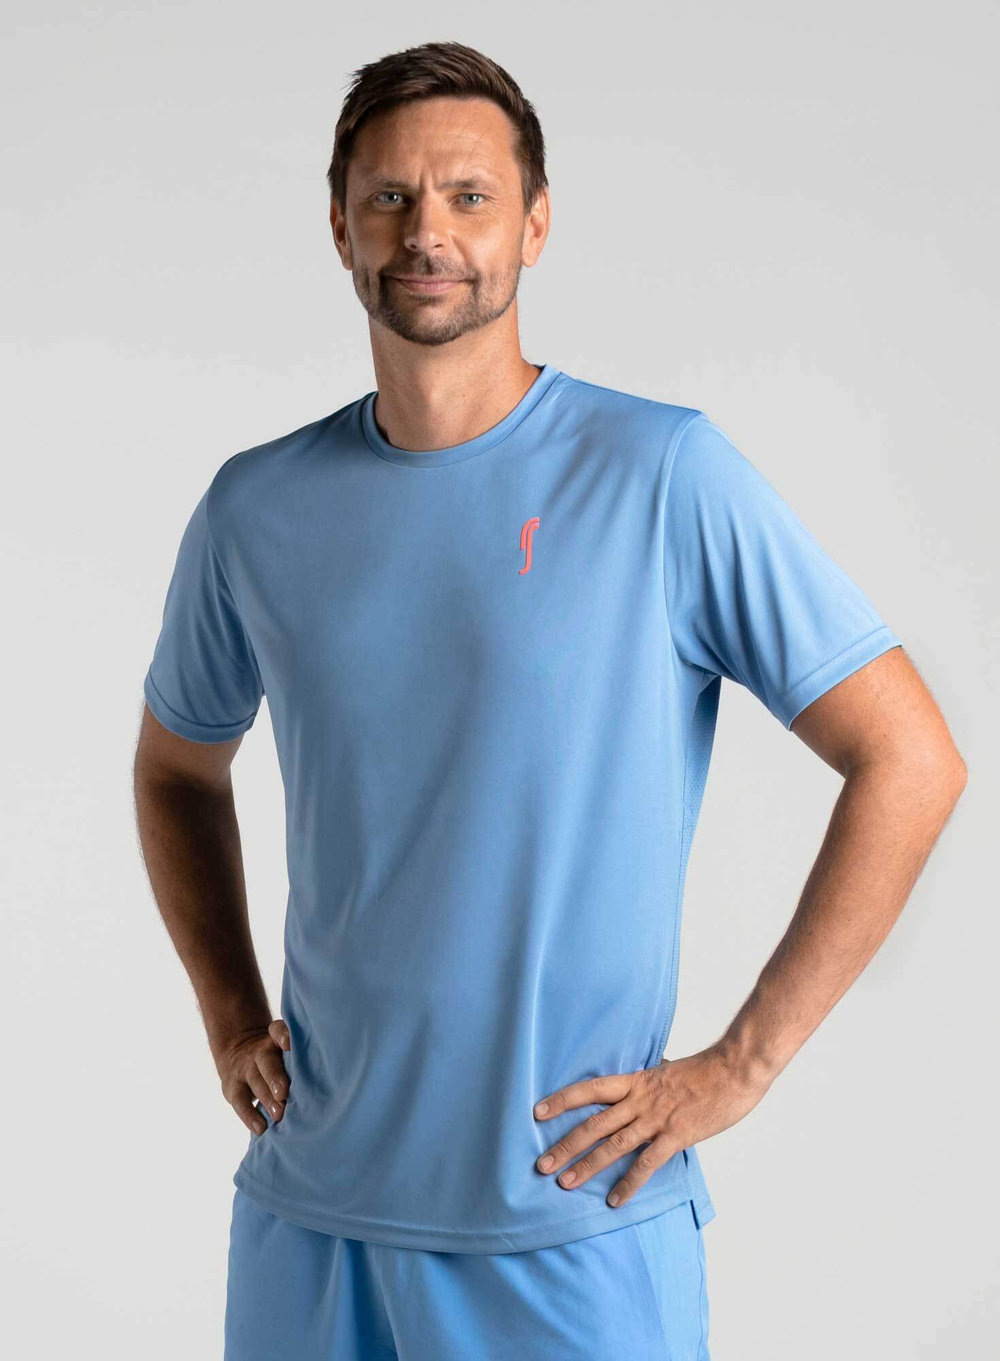 Мужская теннисная футболка RS Performance Tee (211M000 Bl)